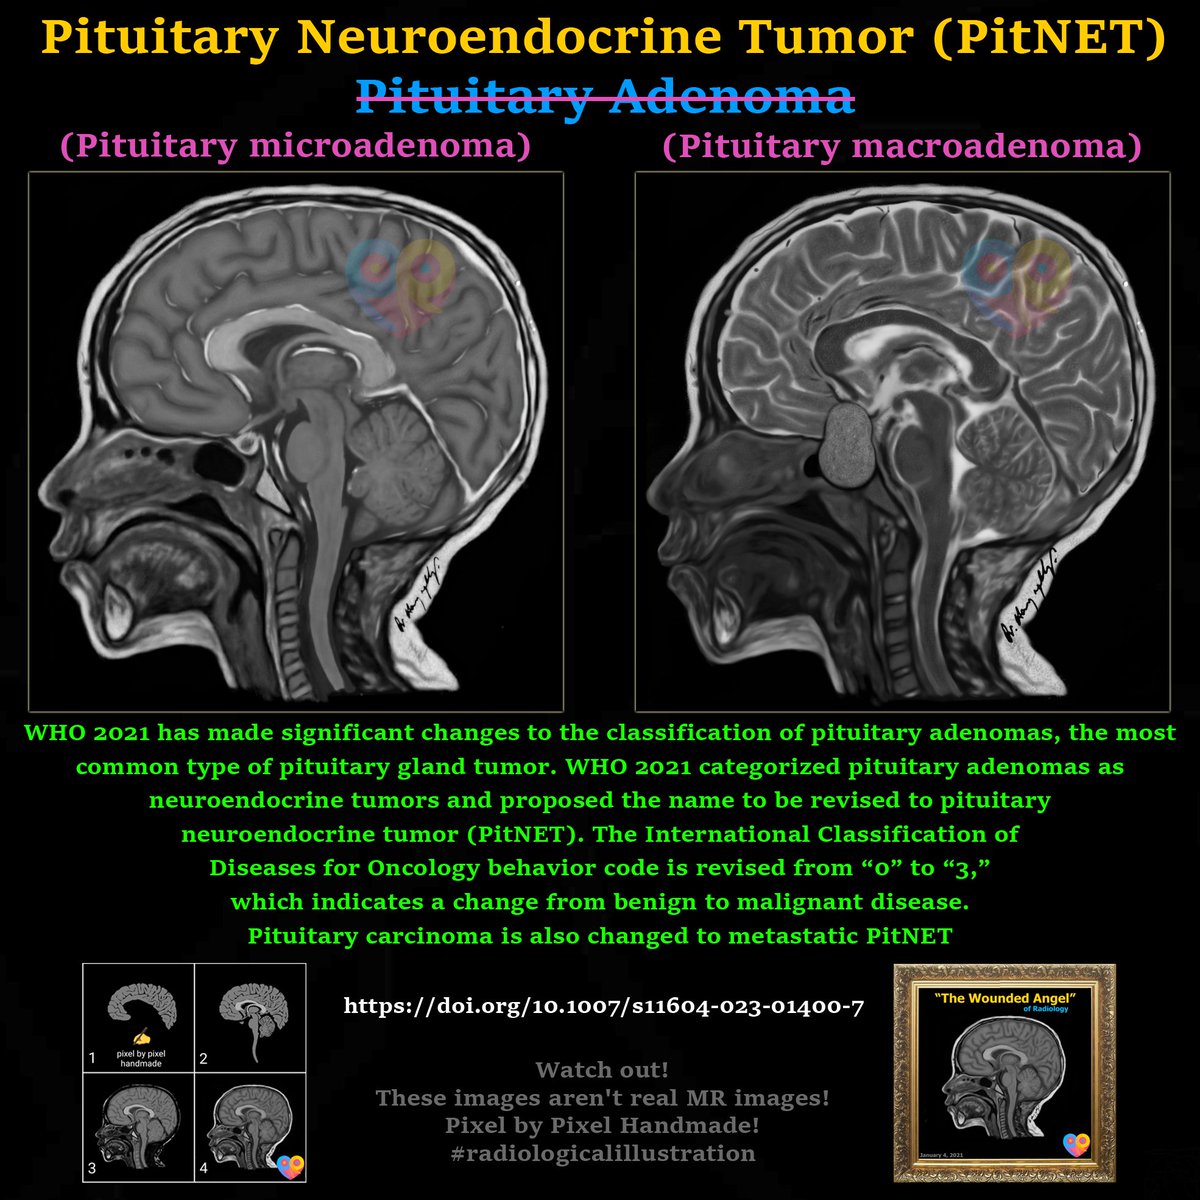 Pituitary Neuroendocrine Tumor (PitNET) 

doi.org/10.1007/s11604… 

#radiologicalillustration ✍️